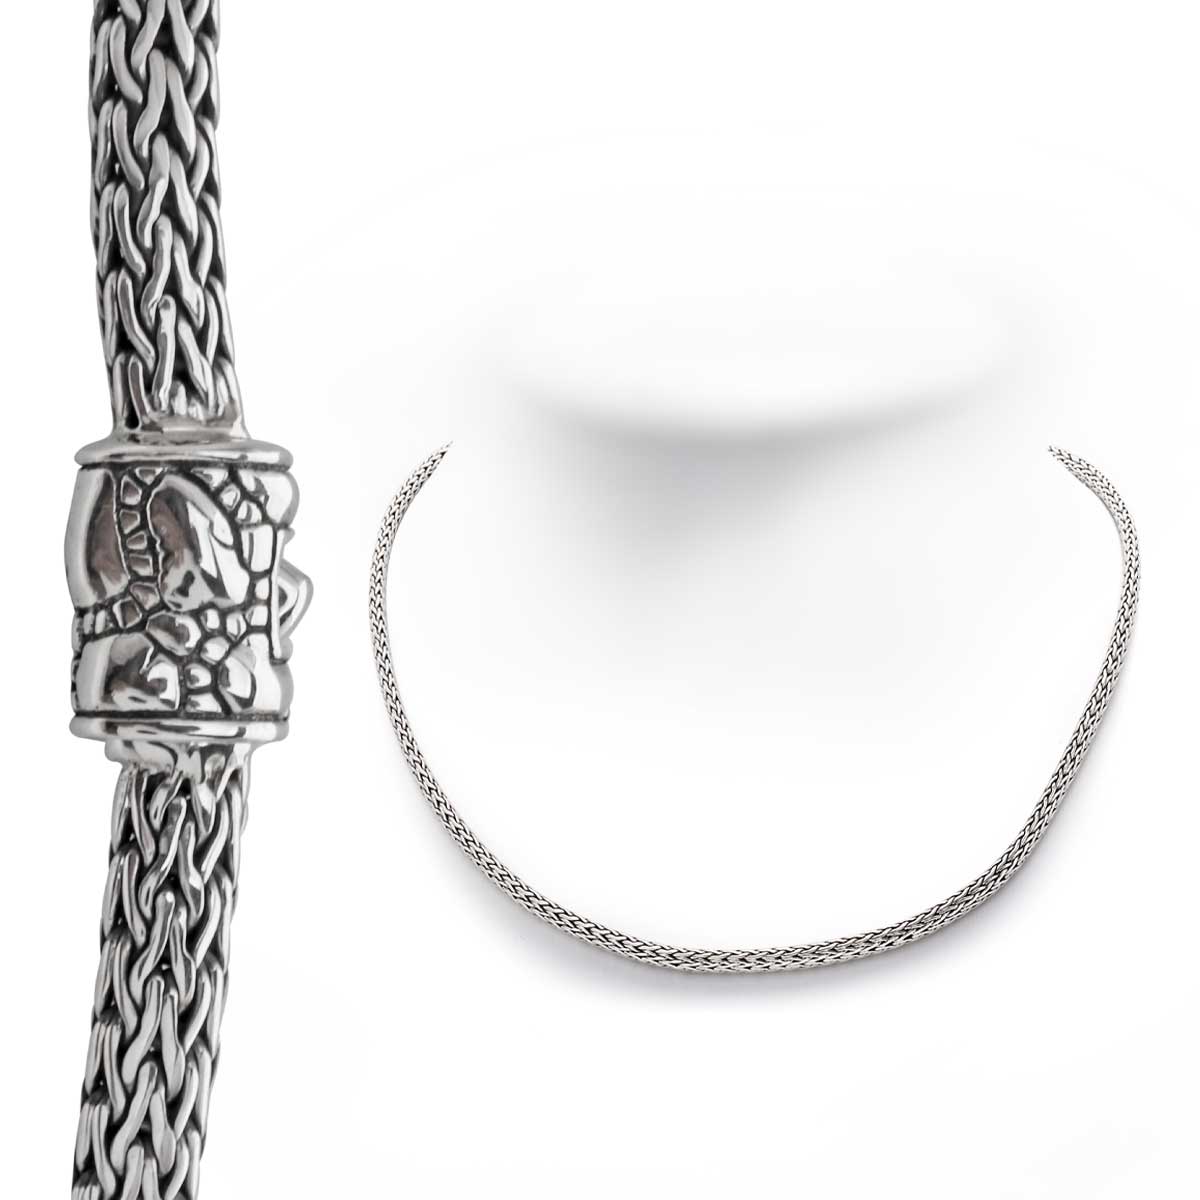 Bali Jewelry Chain SN006-35-18Croc Gallery 1